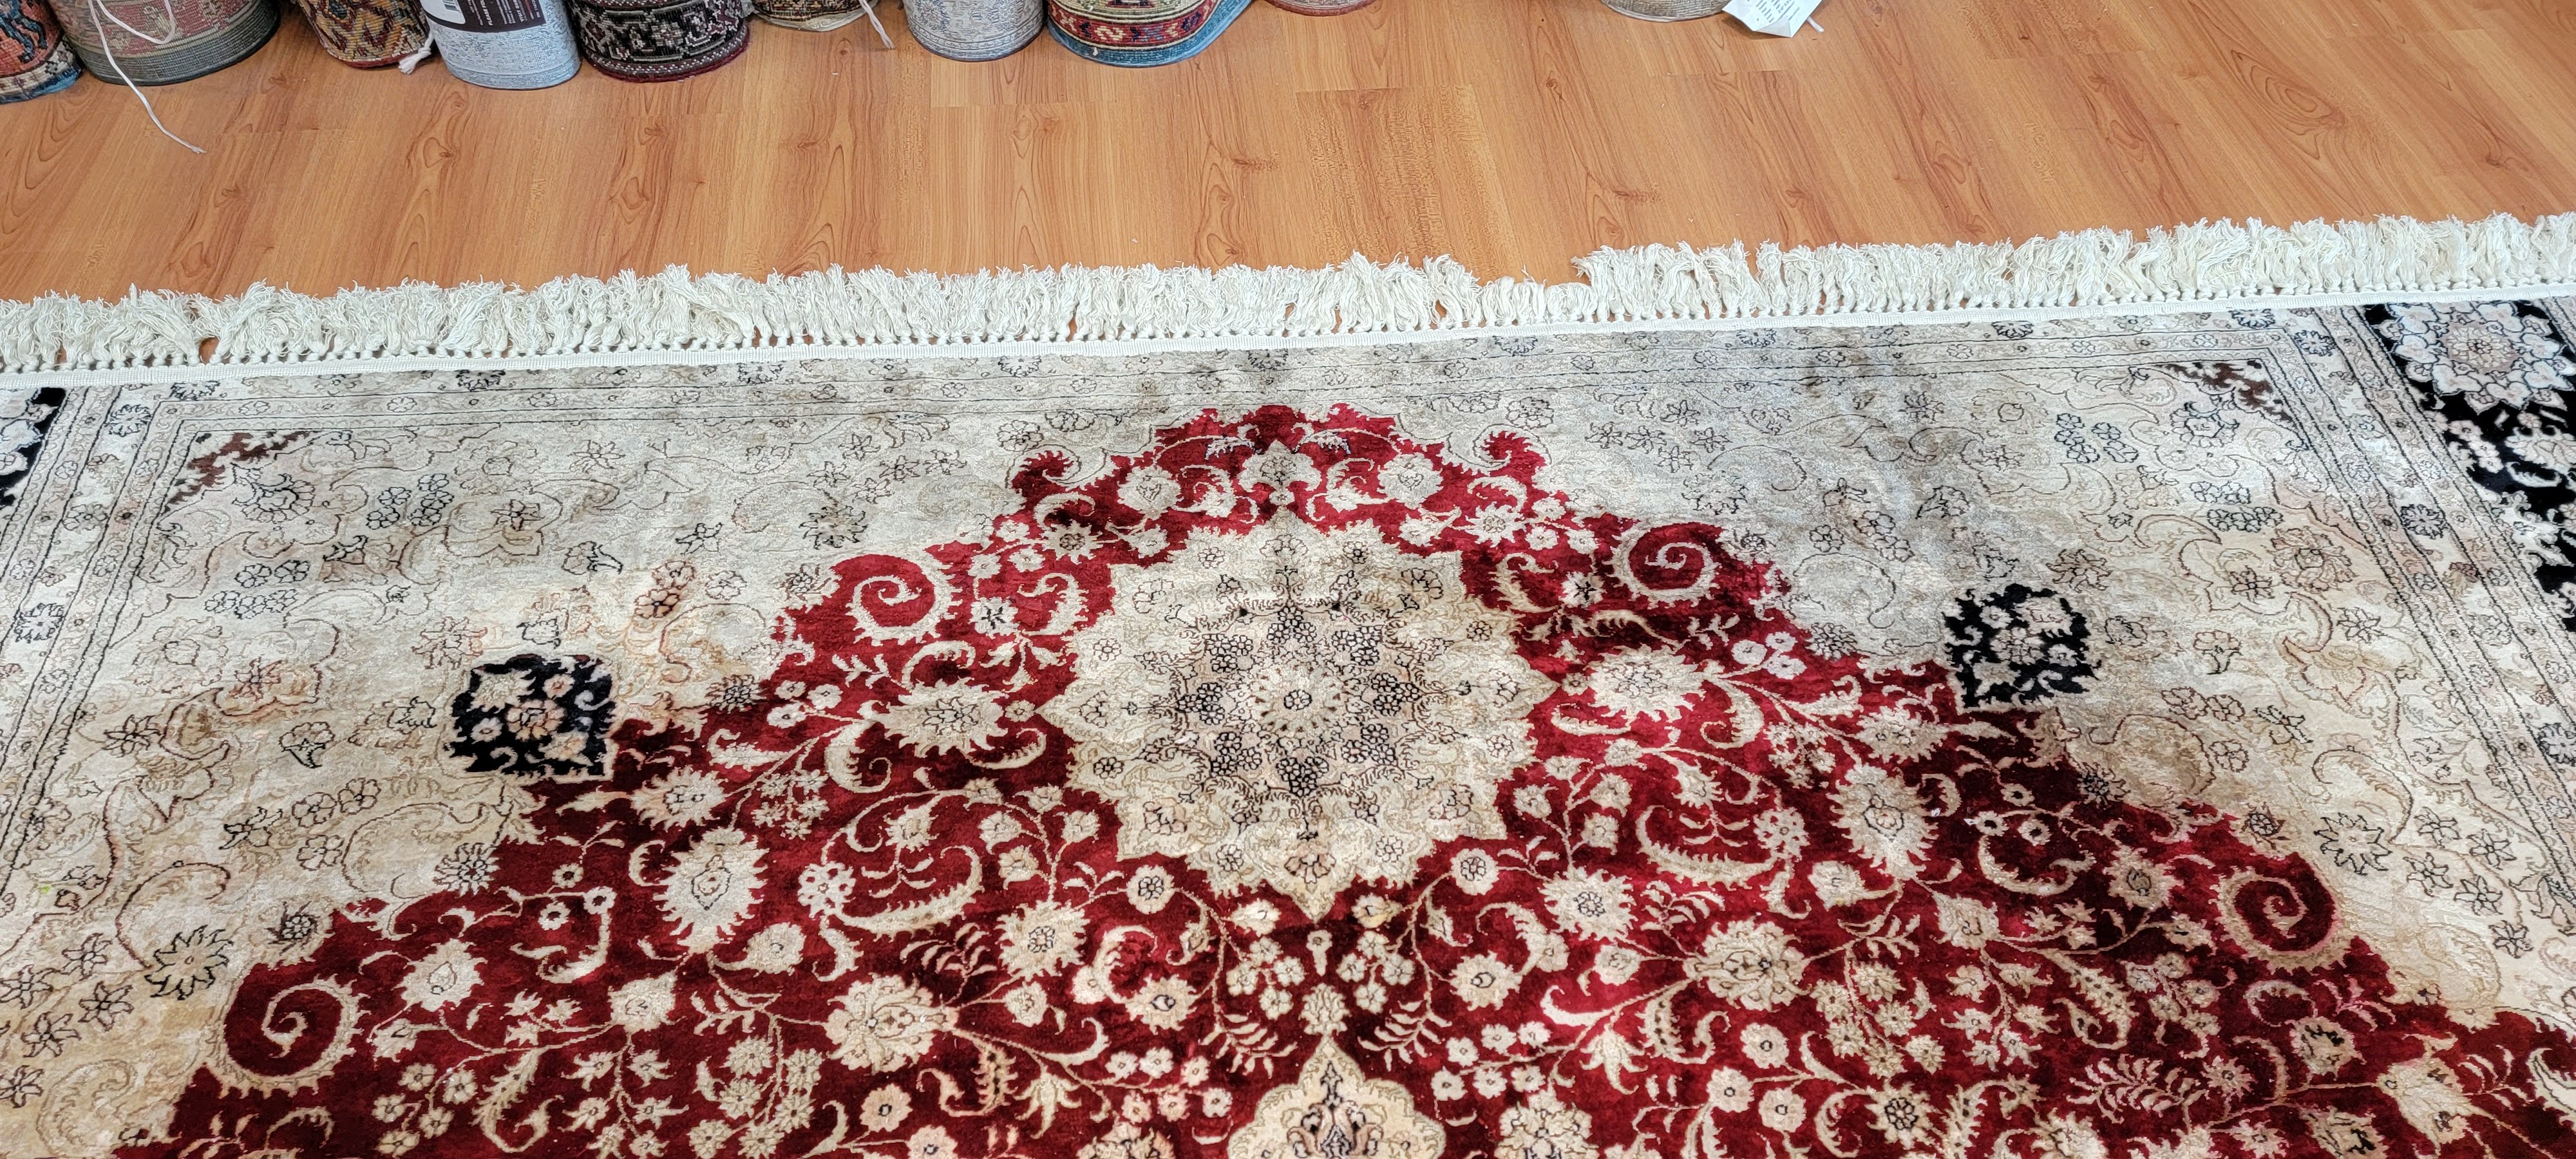 rugs cleaning in avenel